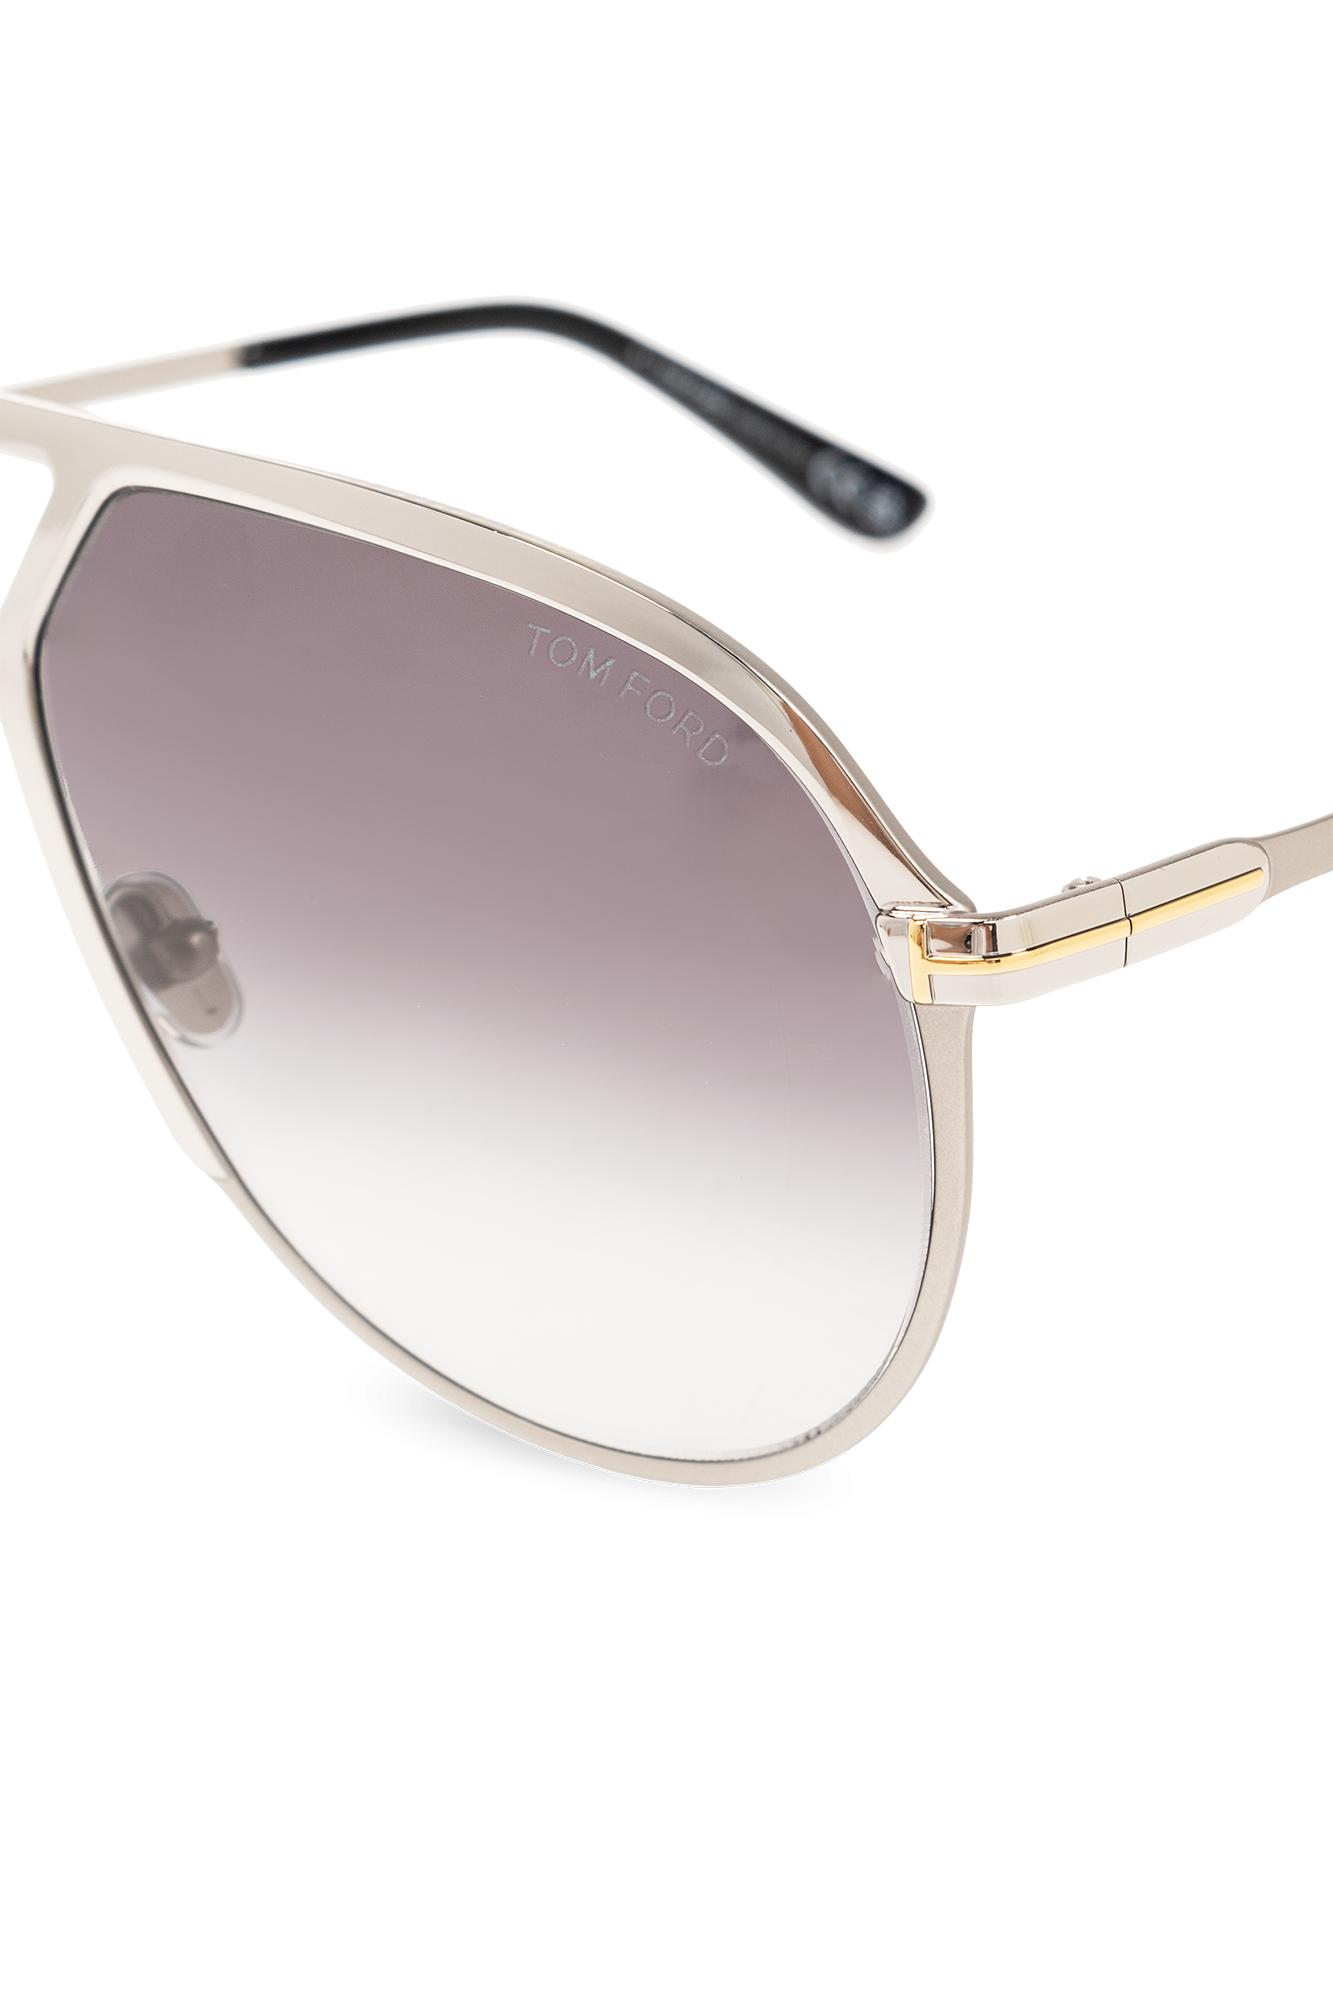 Tom Ford ‘Xavier’ sunglasses